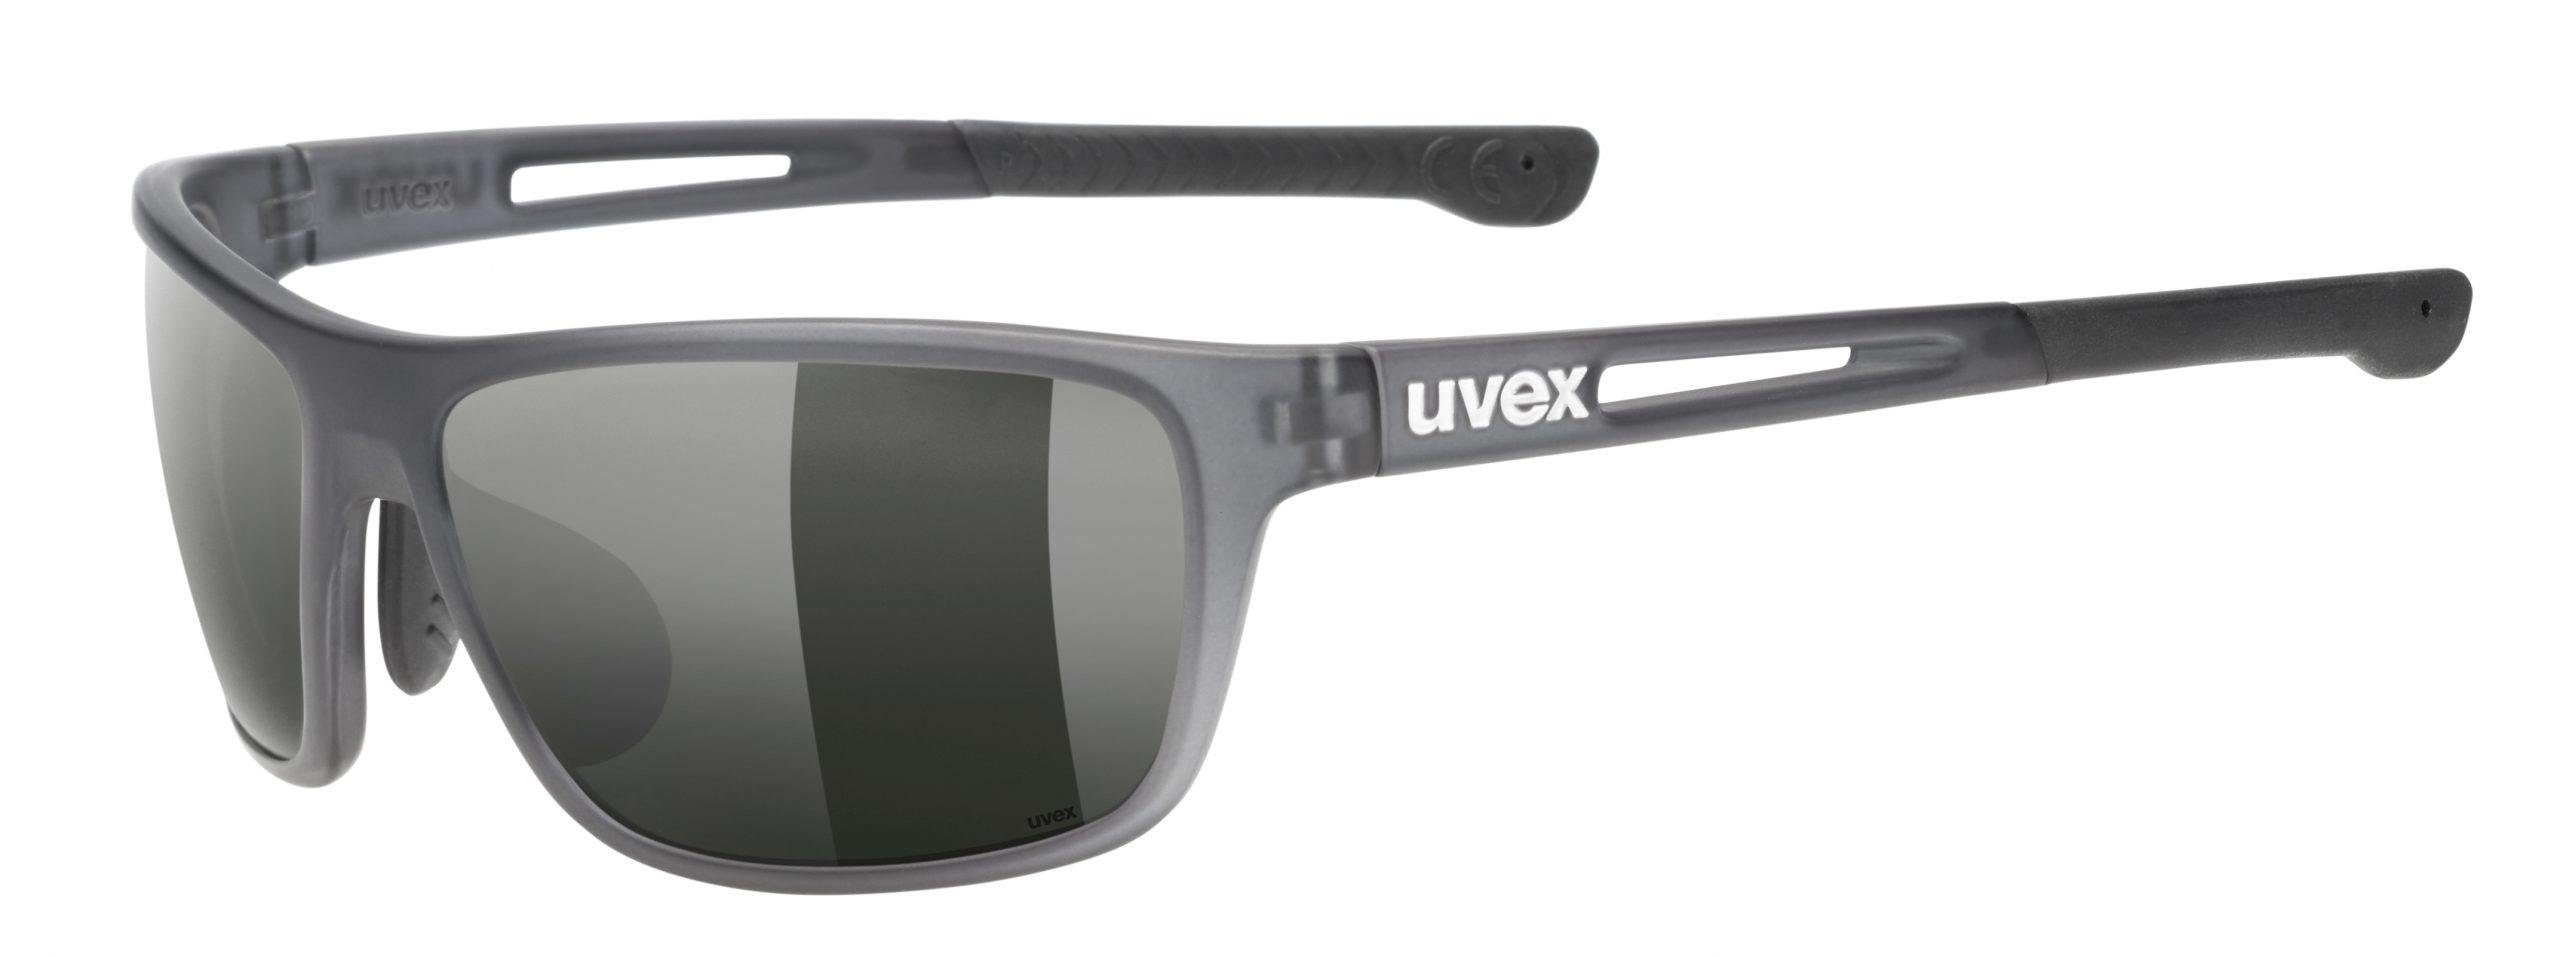 Fahrradbrille Sportbrille UVEX Uvex 4004-1526